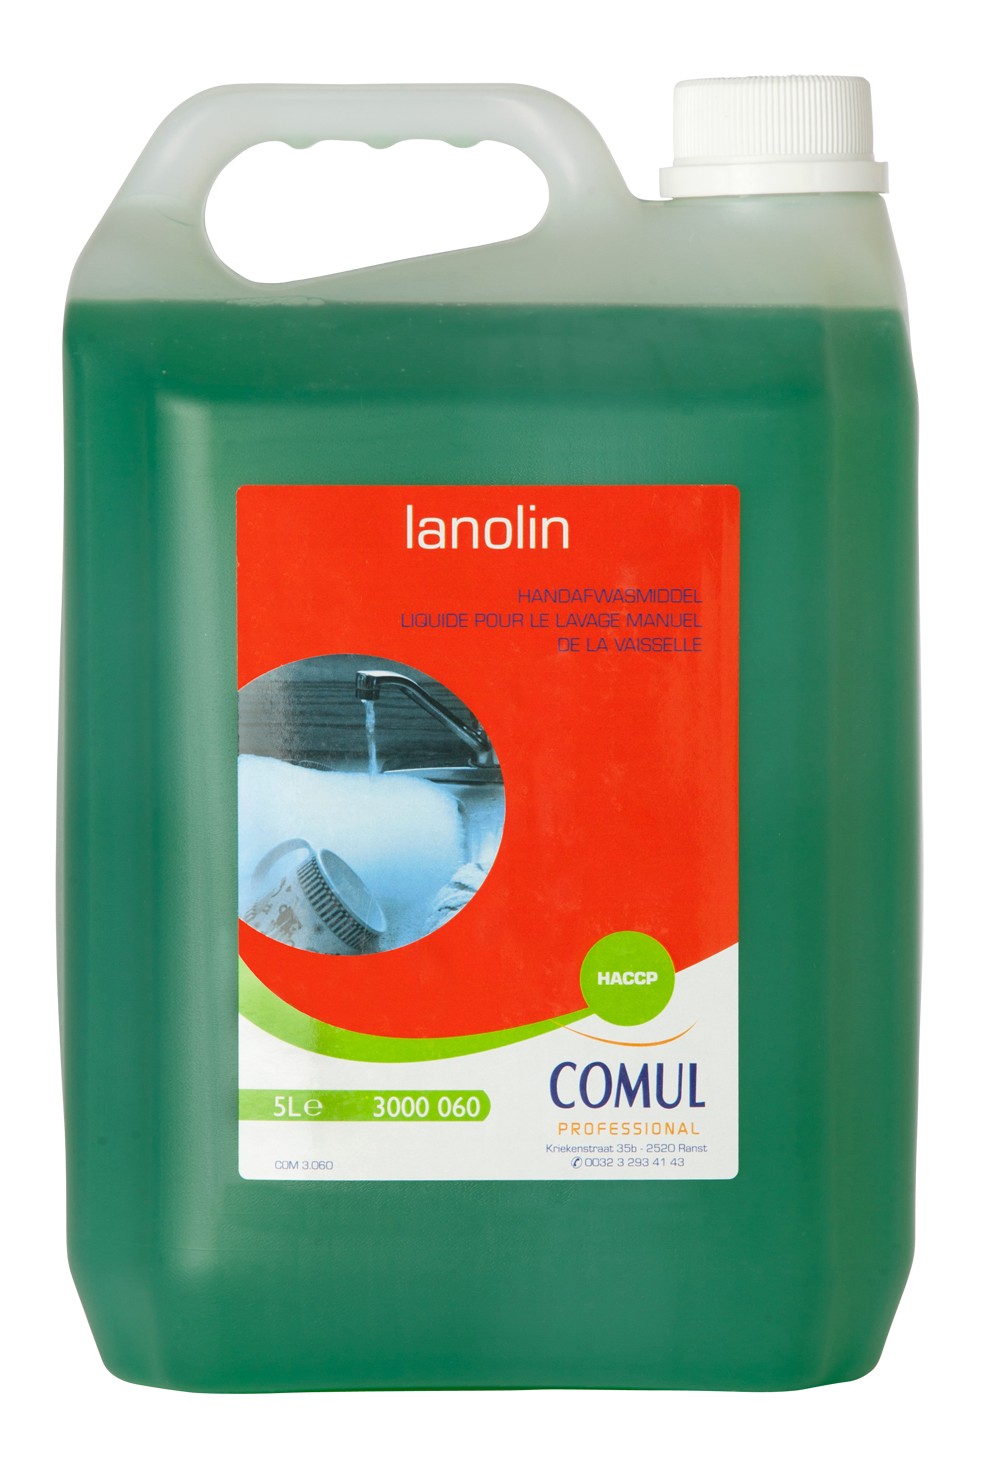 Lanolin handafwasmiddel 5l